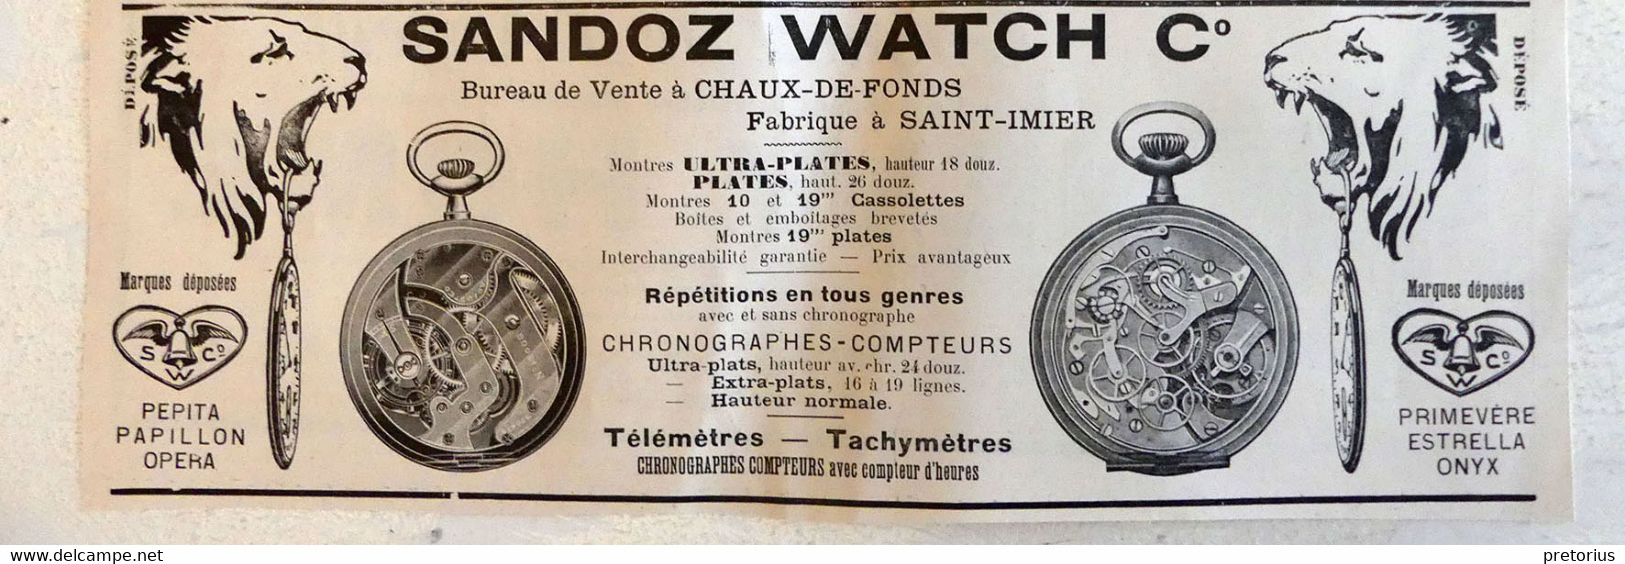 Sandoz Strip Hour Marker Dial Automatic Men's Watch 8501D-70-2 | eBay